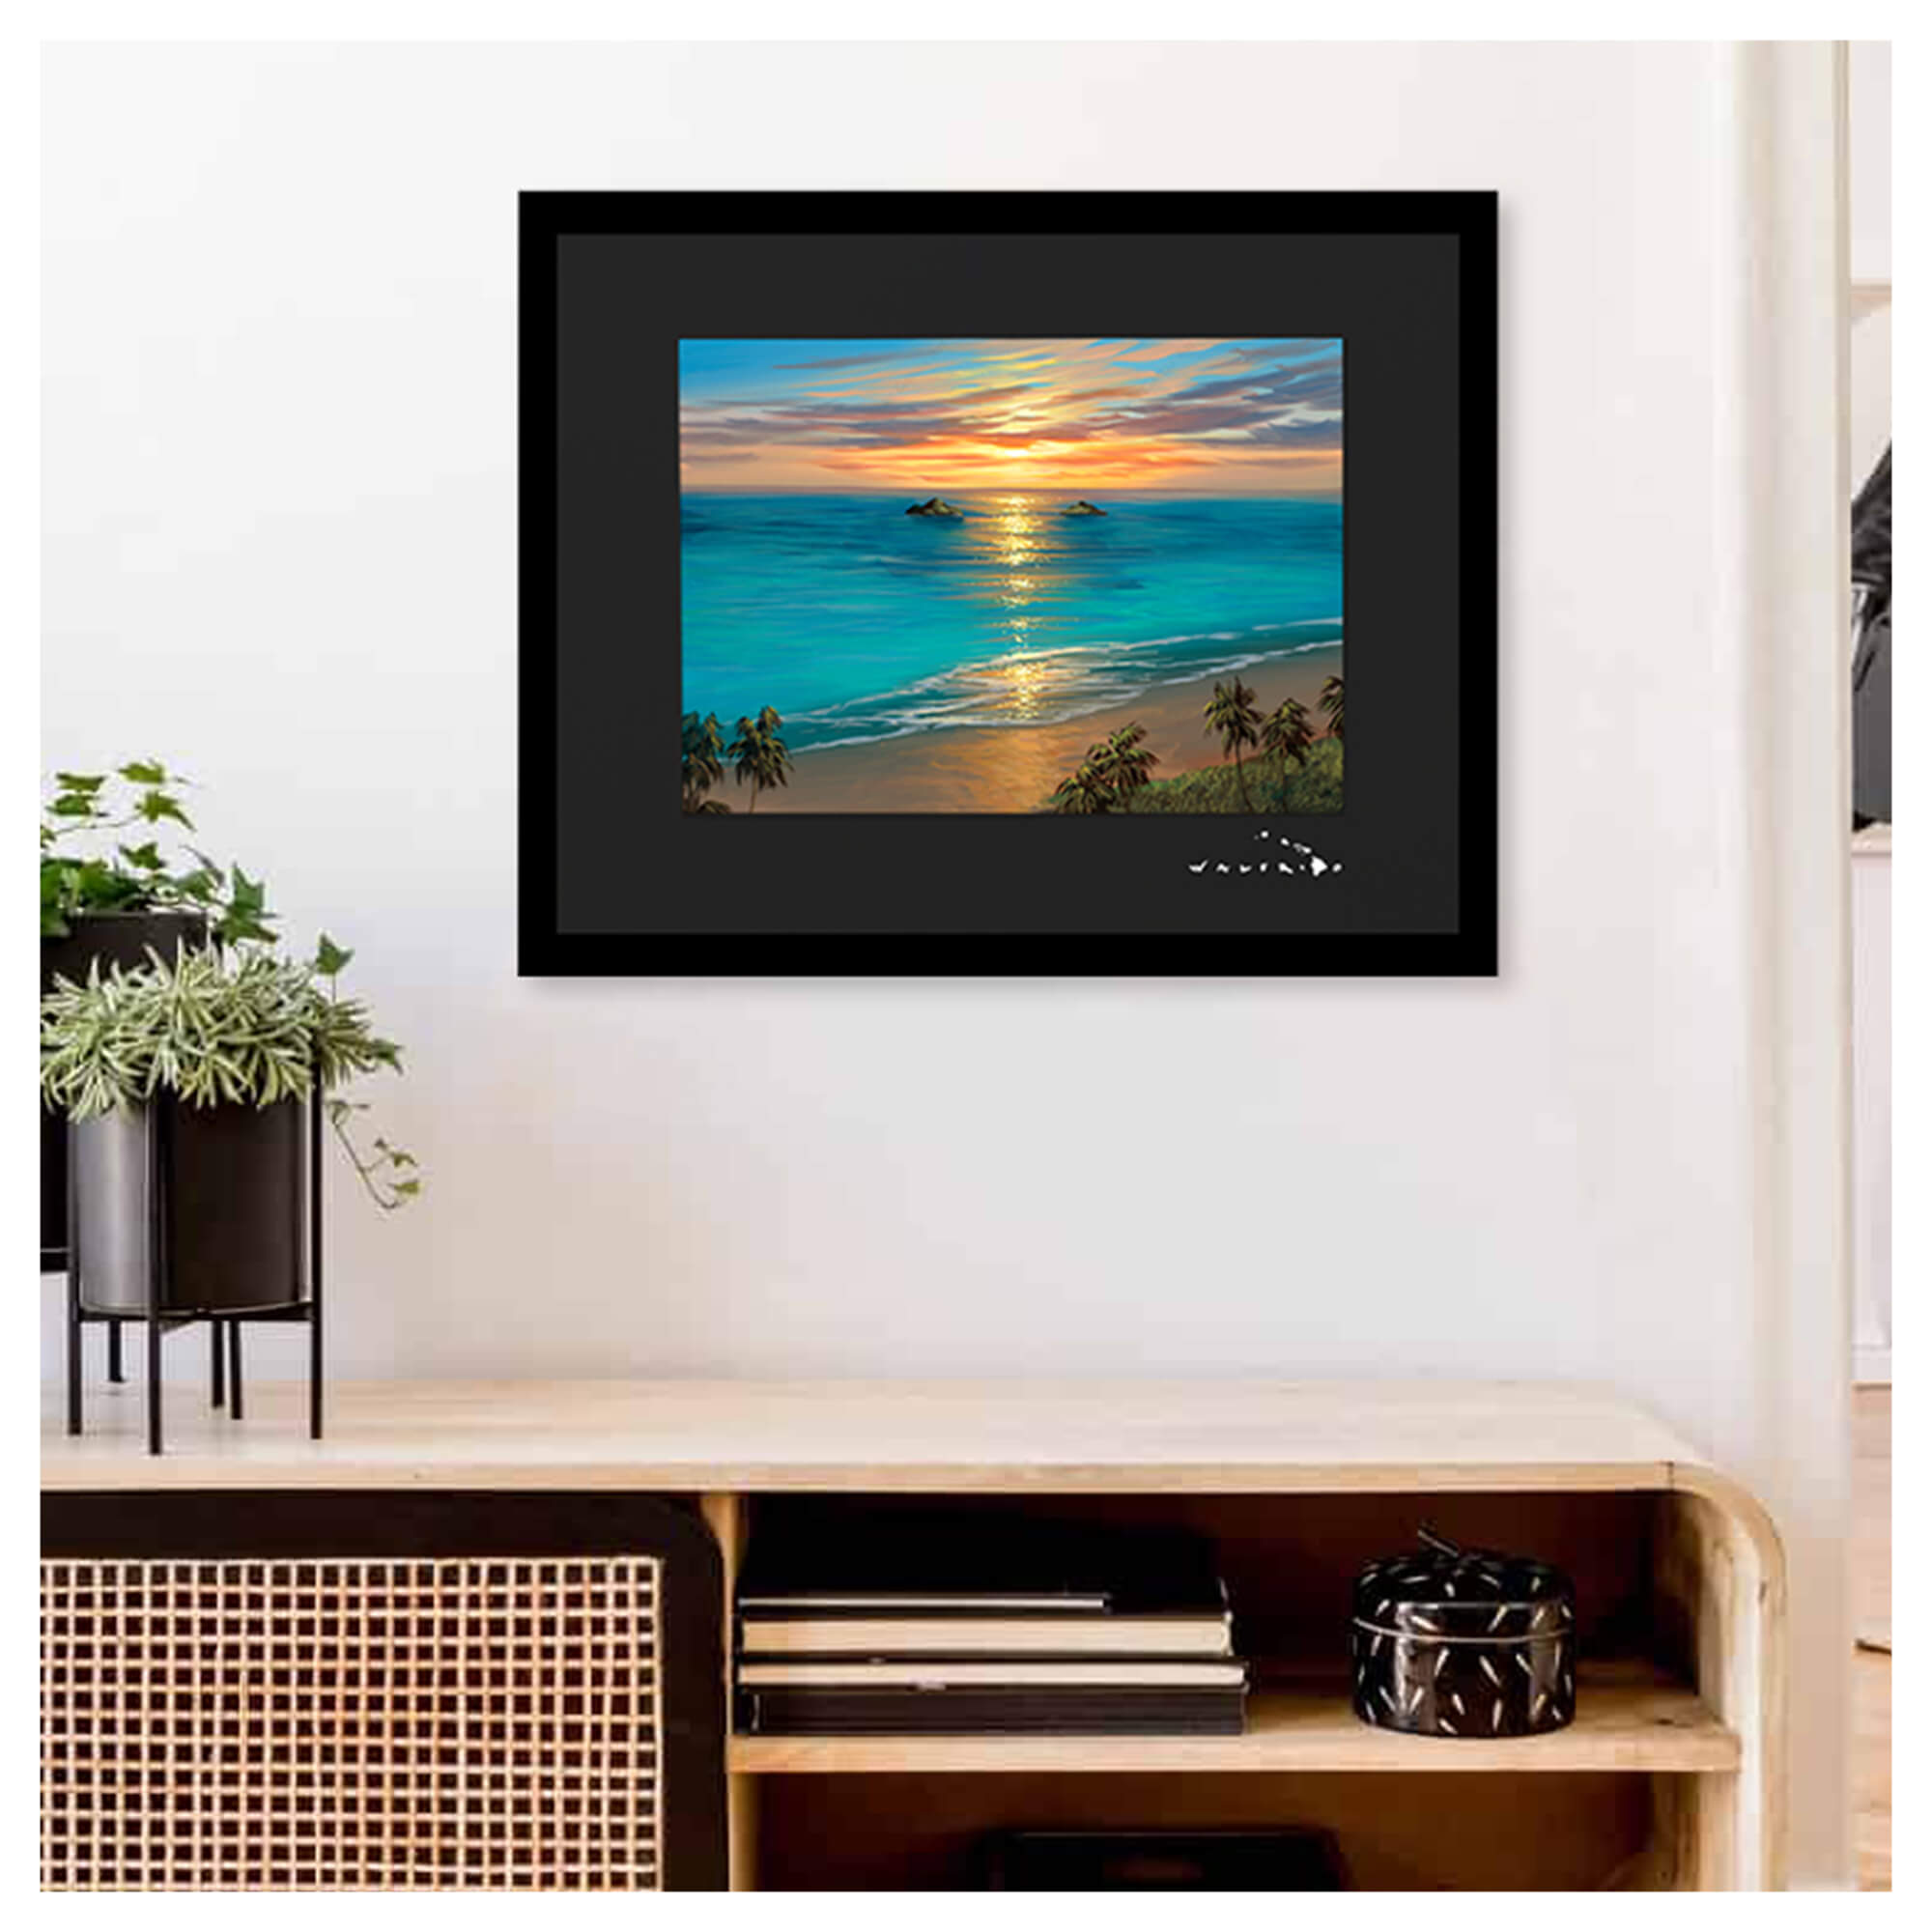 A framed matted art print depicting the sun rising behind the Mokolua Islands just off the coast of eastern Oahu's Lanikai Beach by Hawaii artist Walfrido Garcia